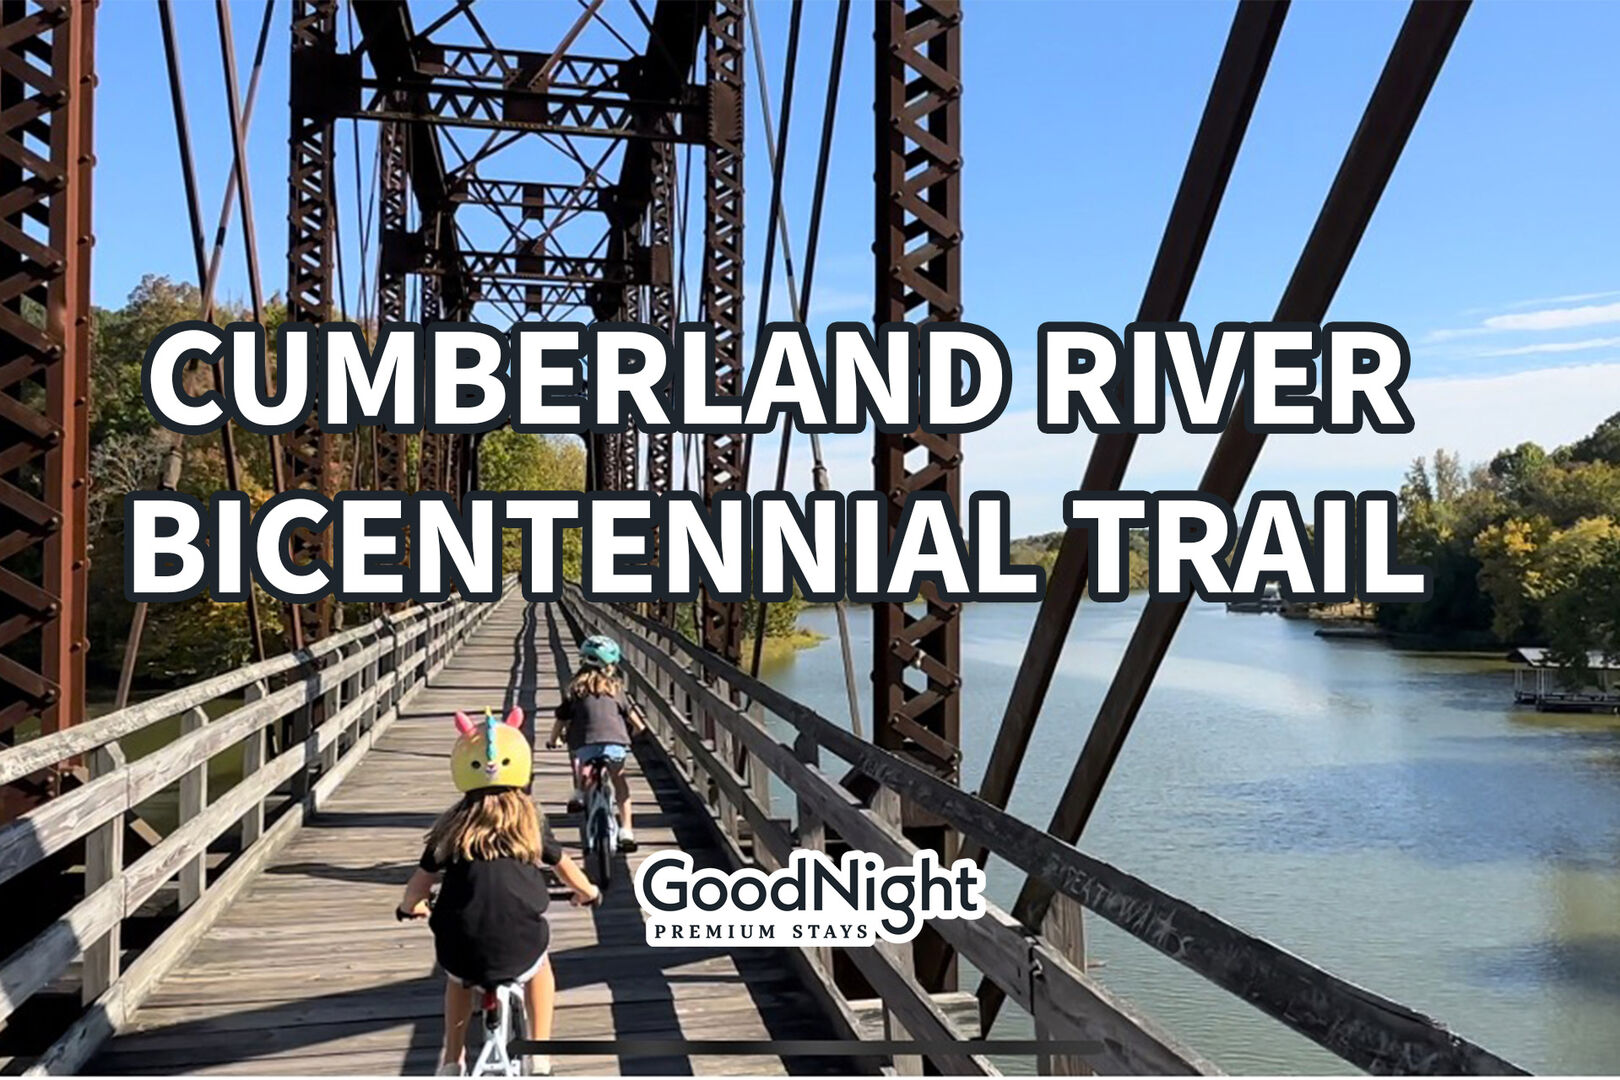 2 mins: Cumberland River Bicentennial Trail Head - 4-mile-long passage